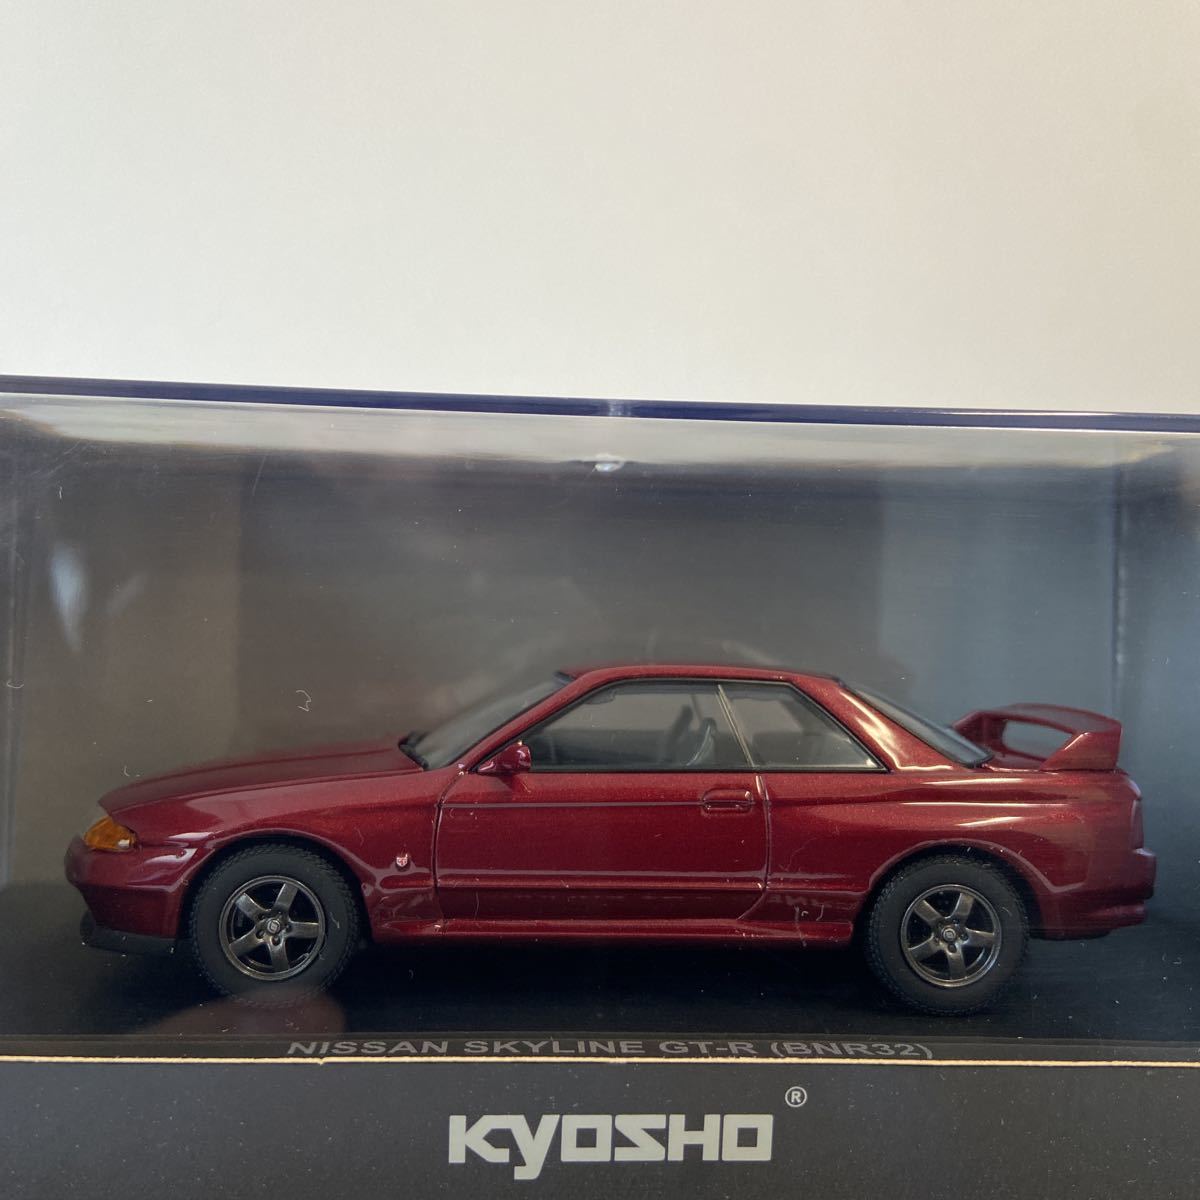  Kyosho 1/43 Nissan Skyline GT-R BNR32 Red Pearl Metallic Nissan SKYLINE R32 красный жемчуг металлик старый машина миникар модель машина 